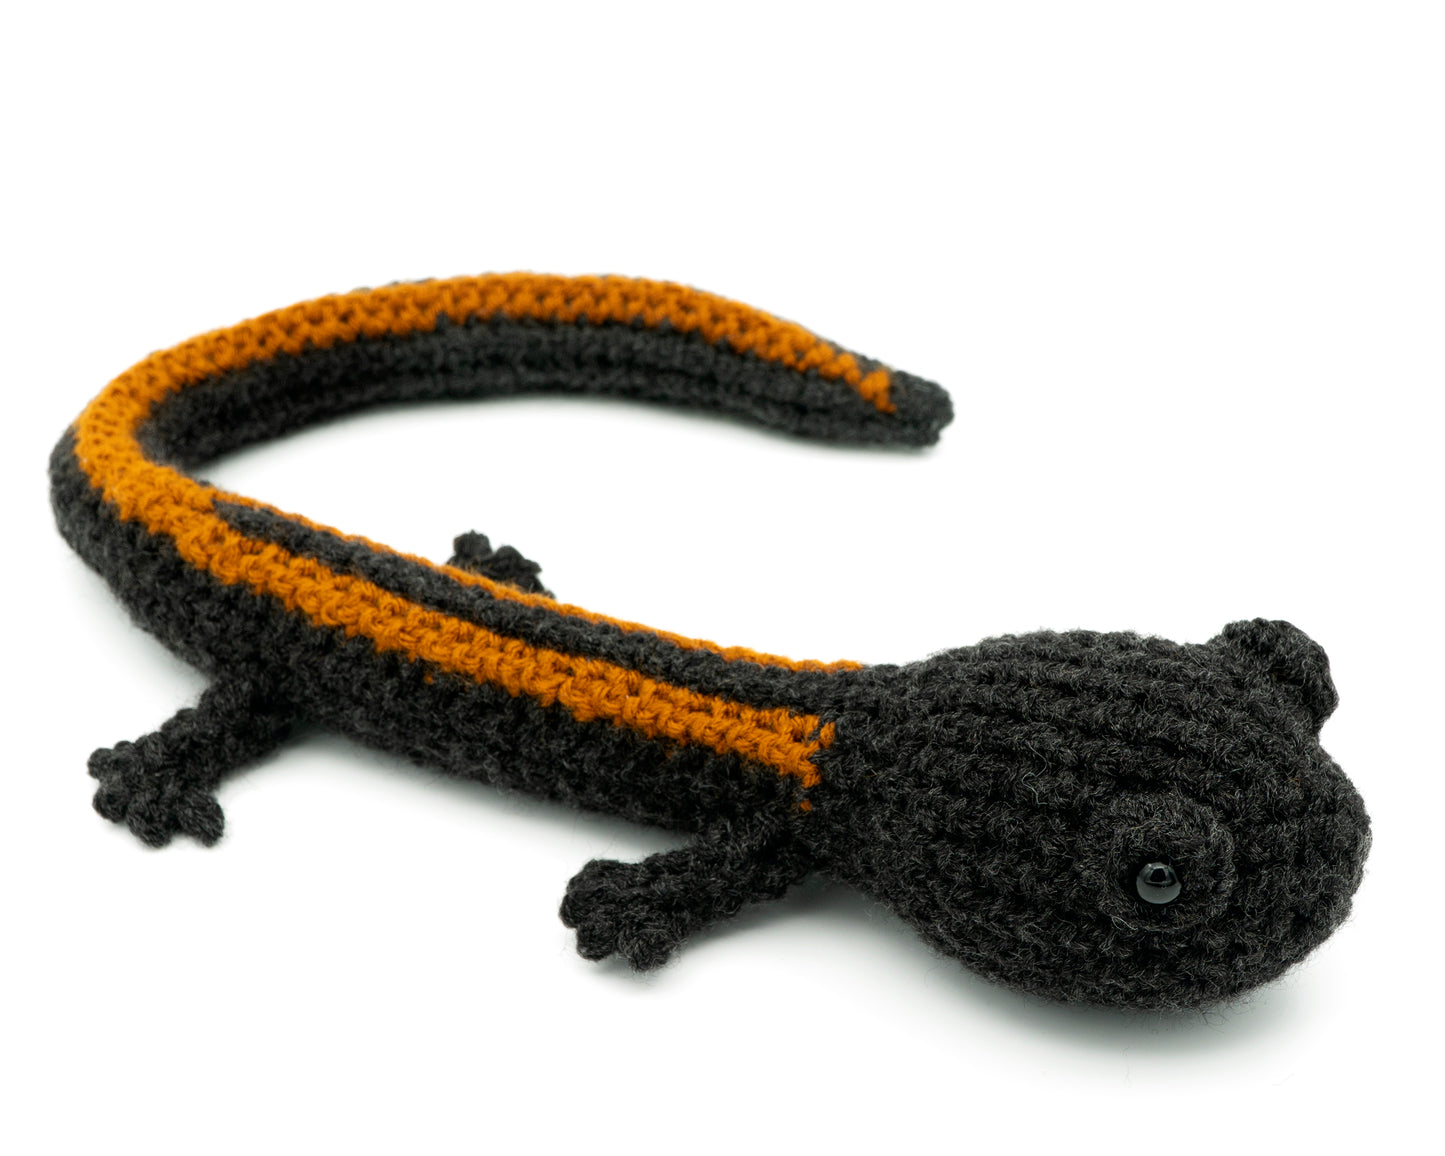 amigurumi crochet salamander pattern close up of head